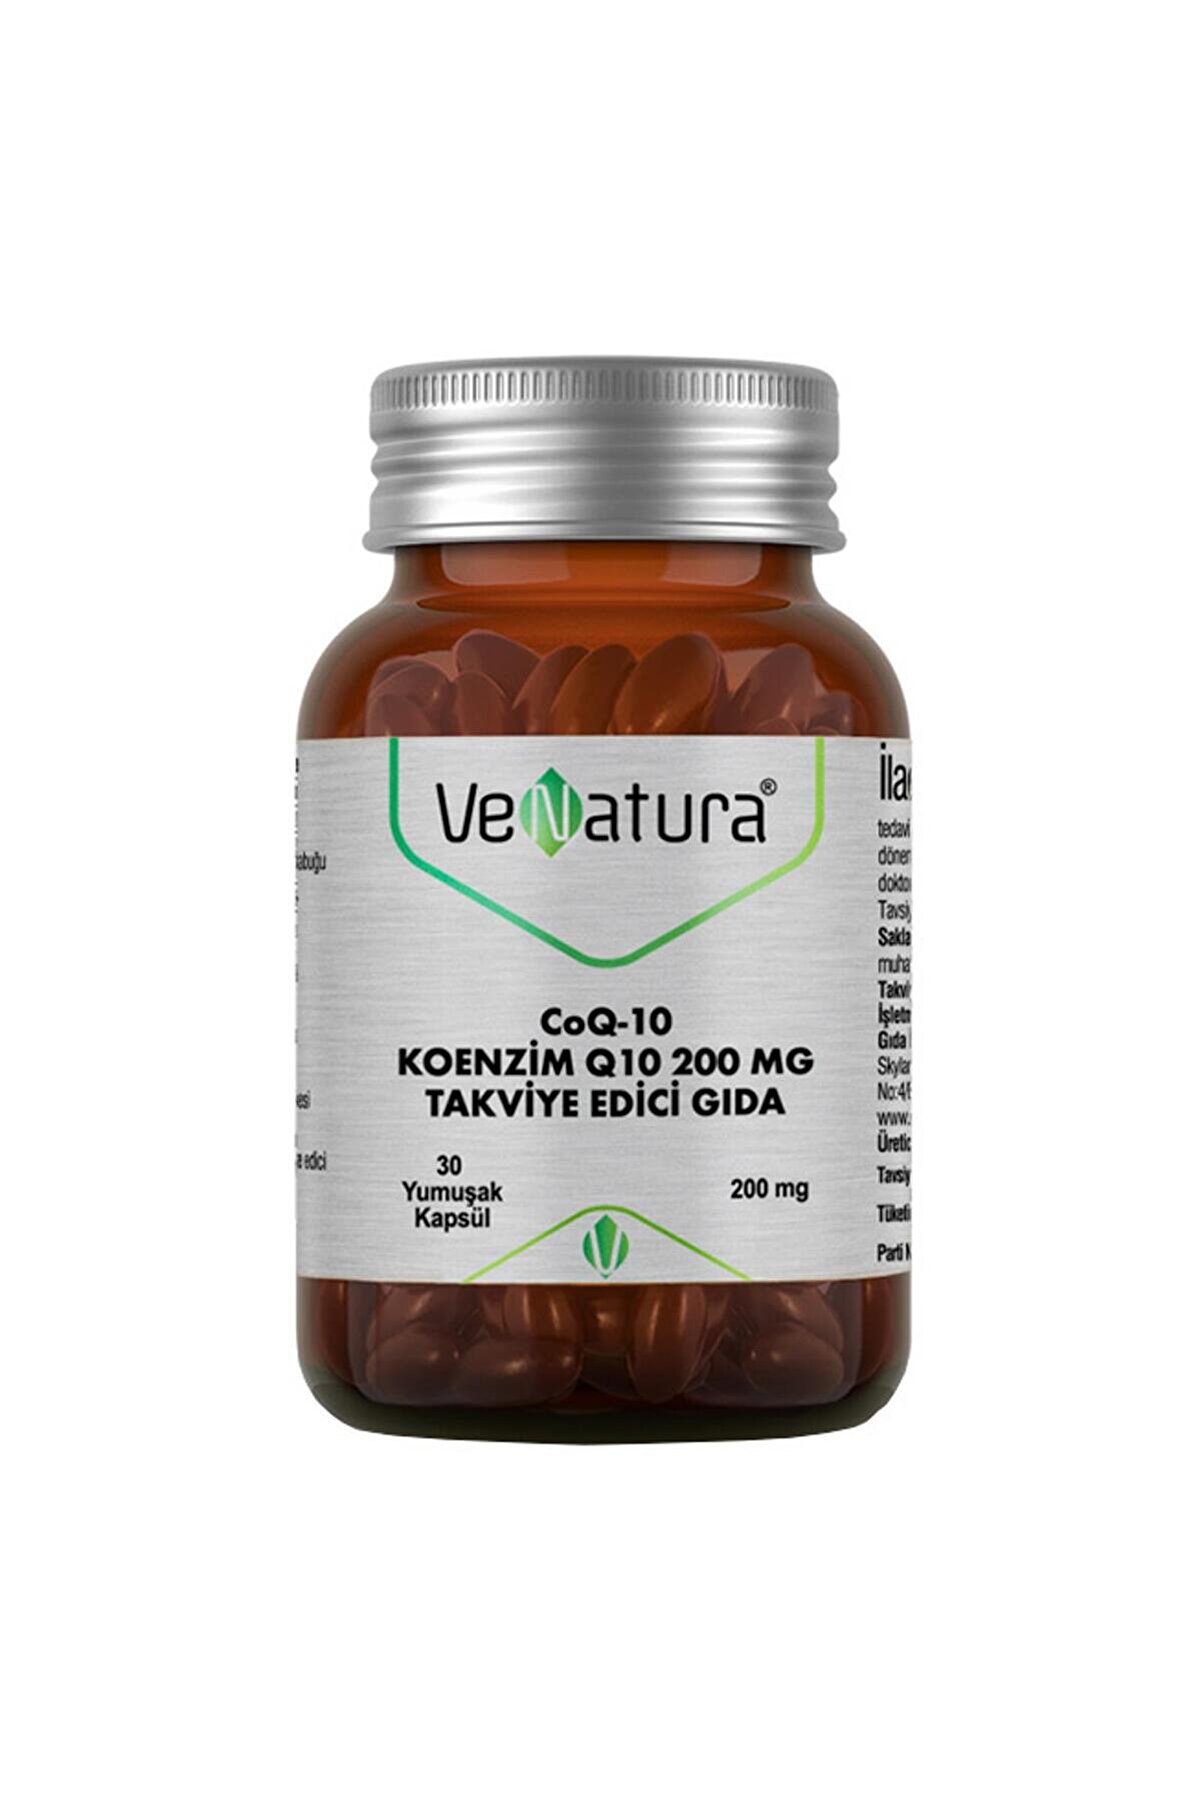 Venatura Coq-10 Koenzim Q10 200 Mg Takviye Edici Gıda 30 Kapsül